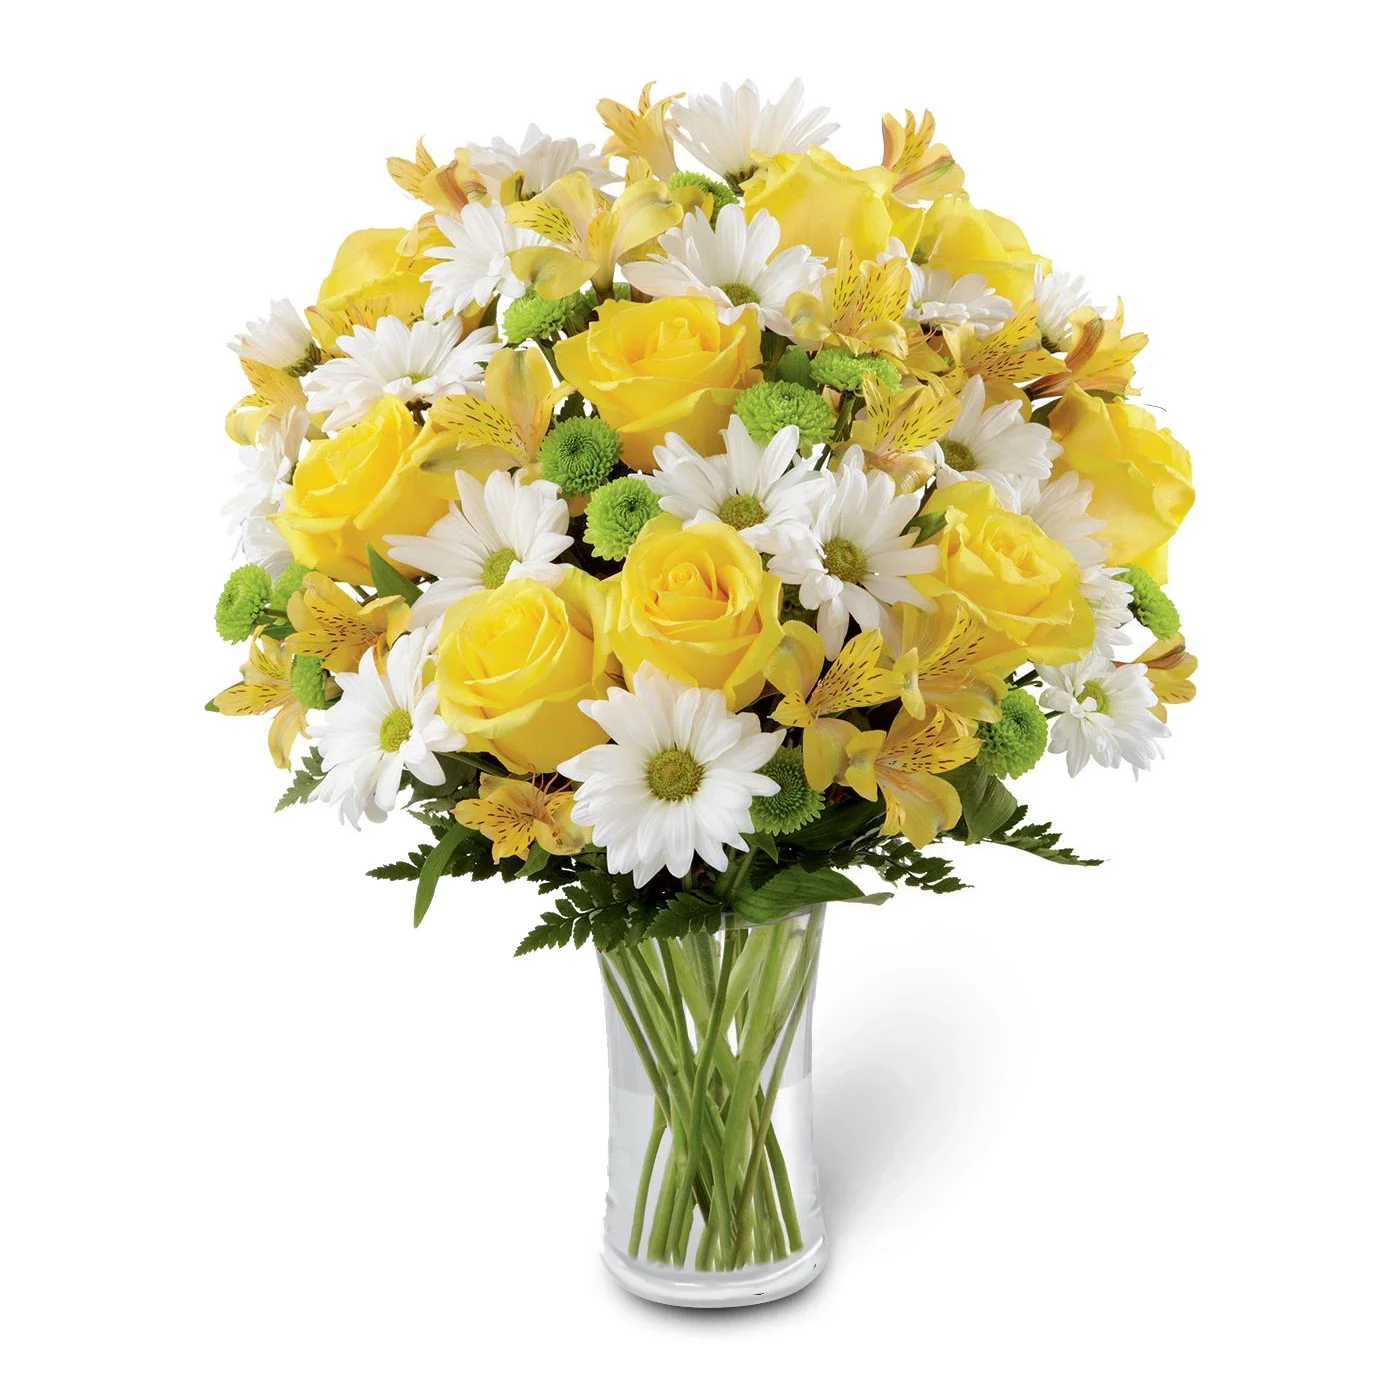 Paris blomster- Gul og hvid blomsterhandlers overraskelsesbuk Blomst buket/Arrangement